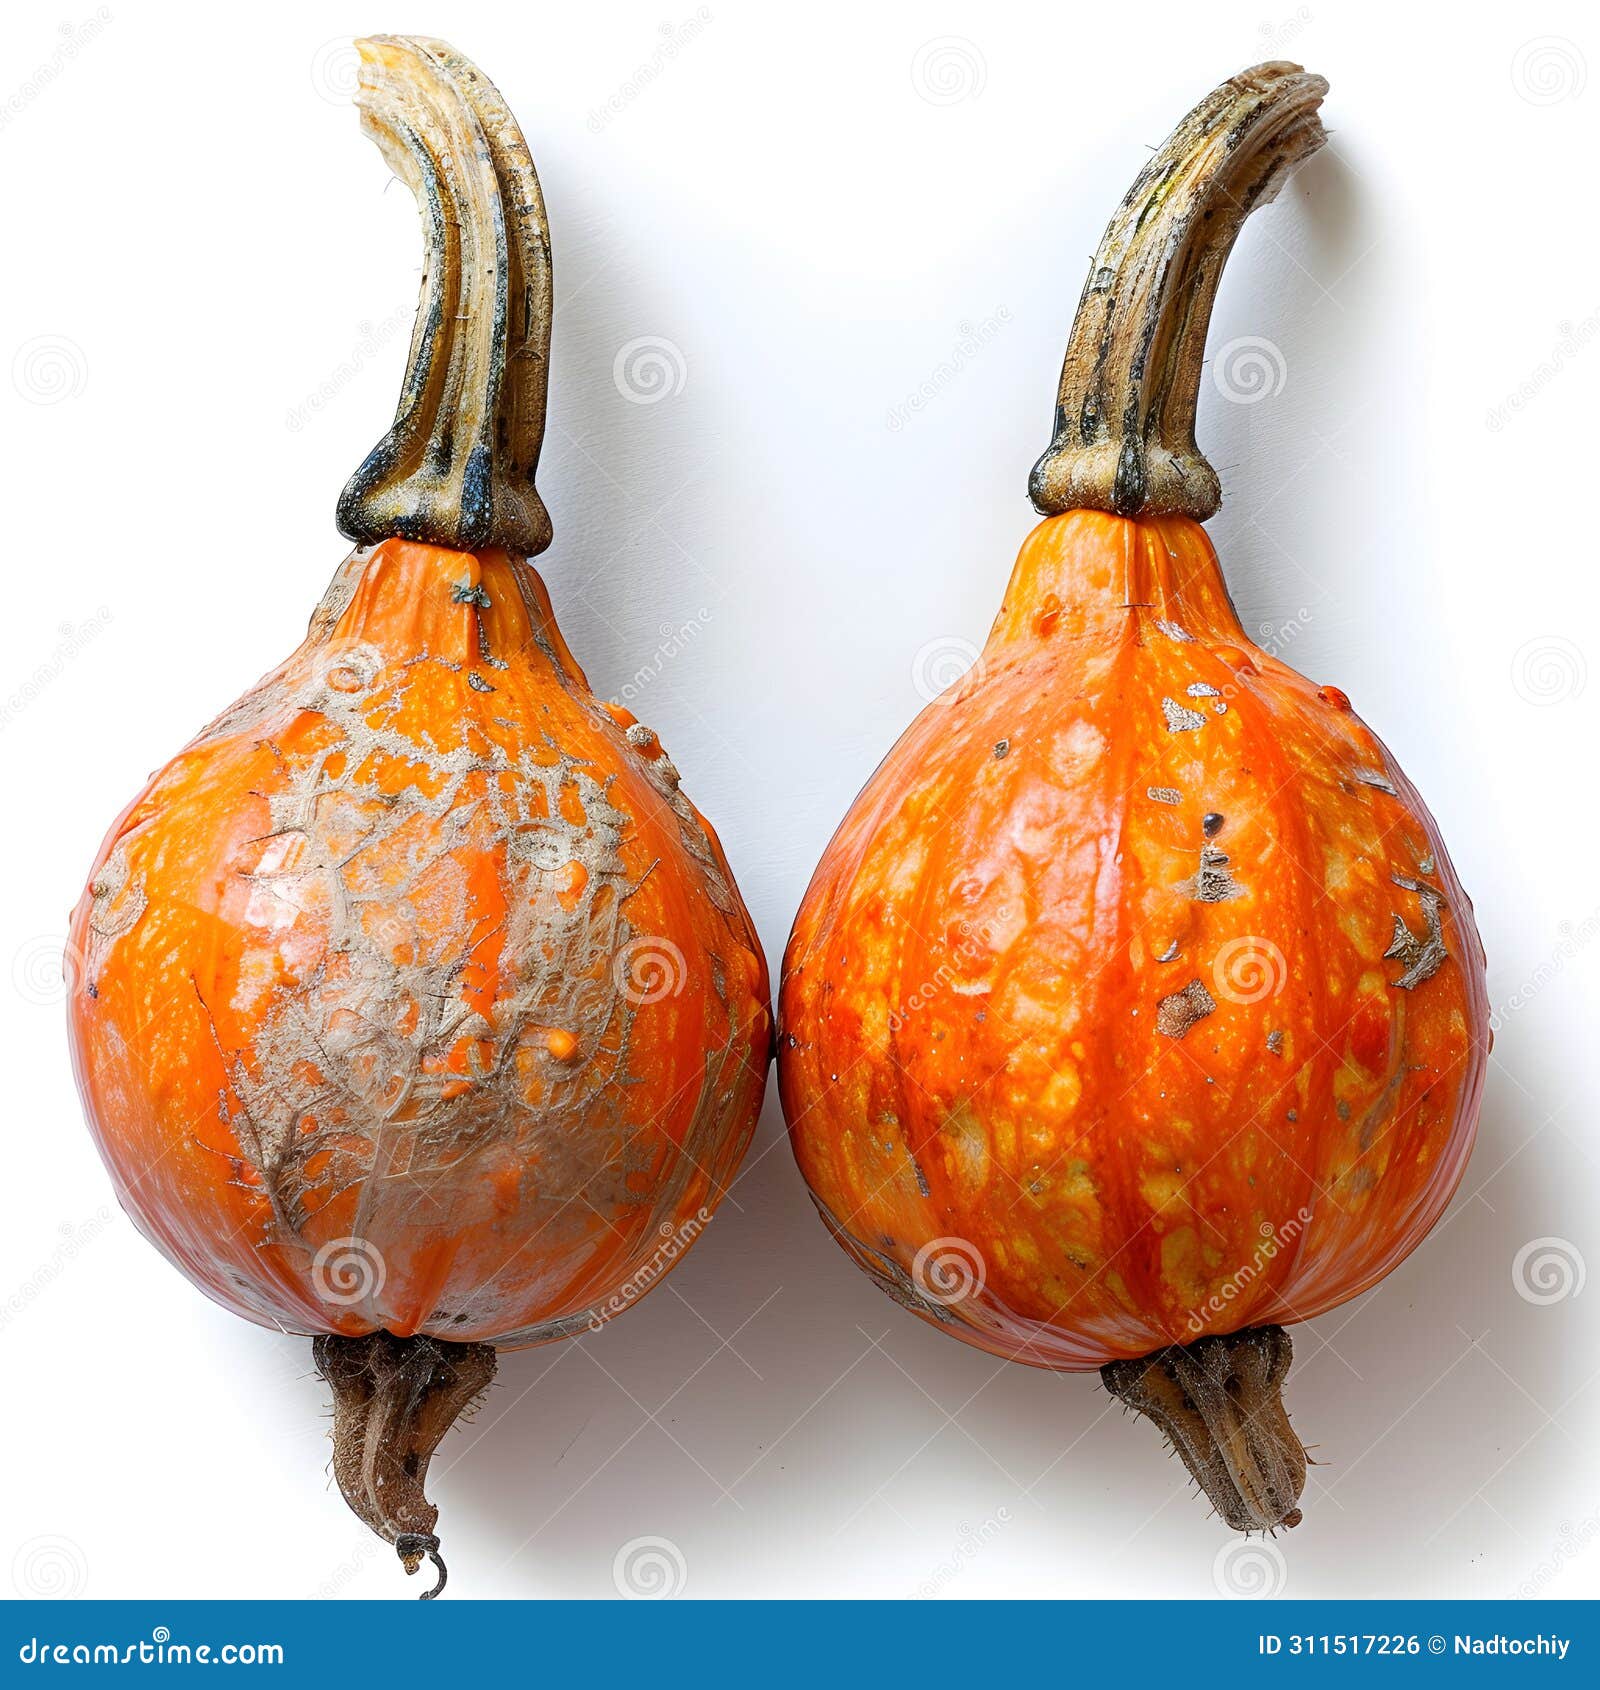 two orange calabaza pumpkins displayed on white surface